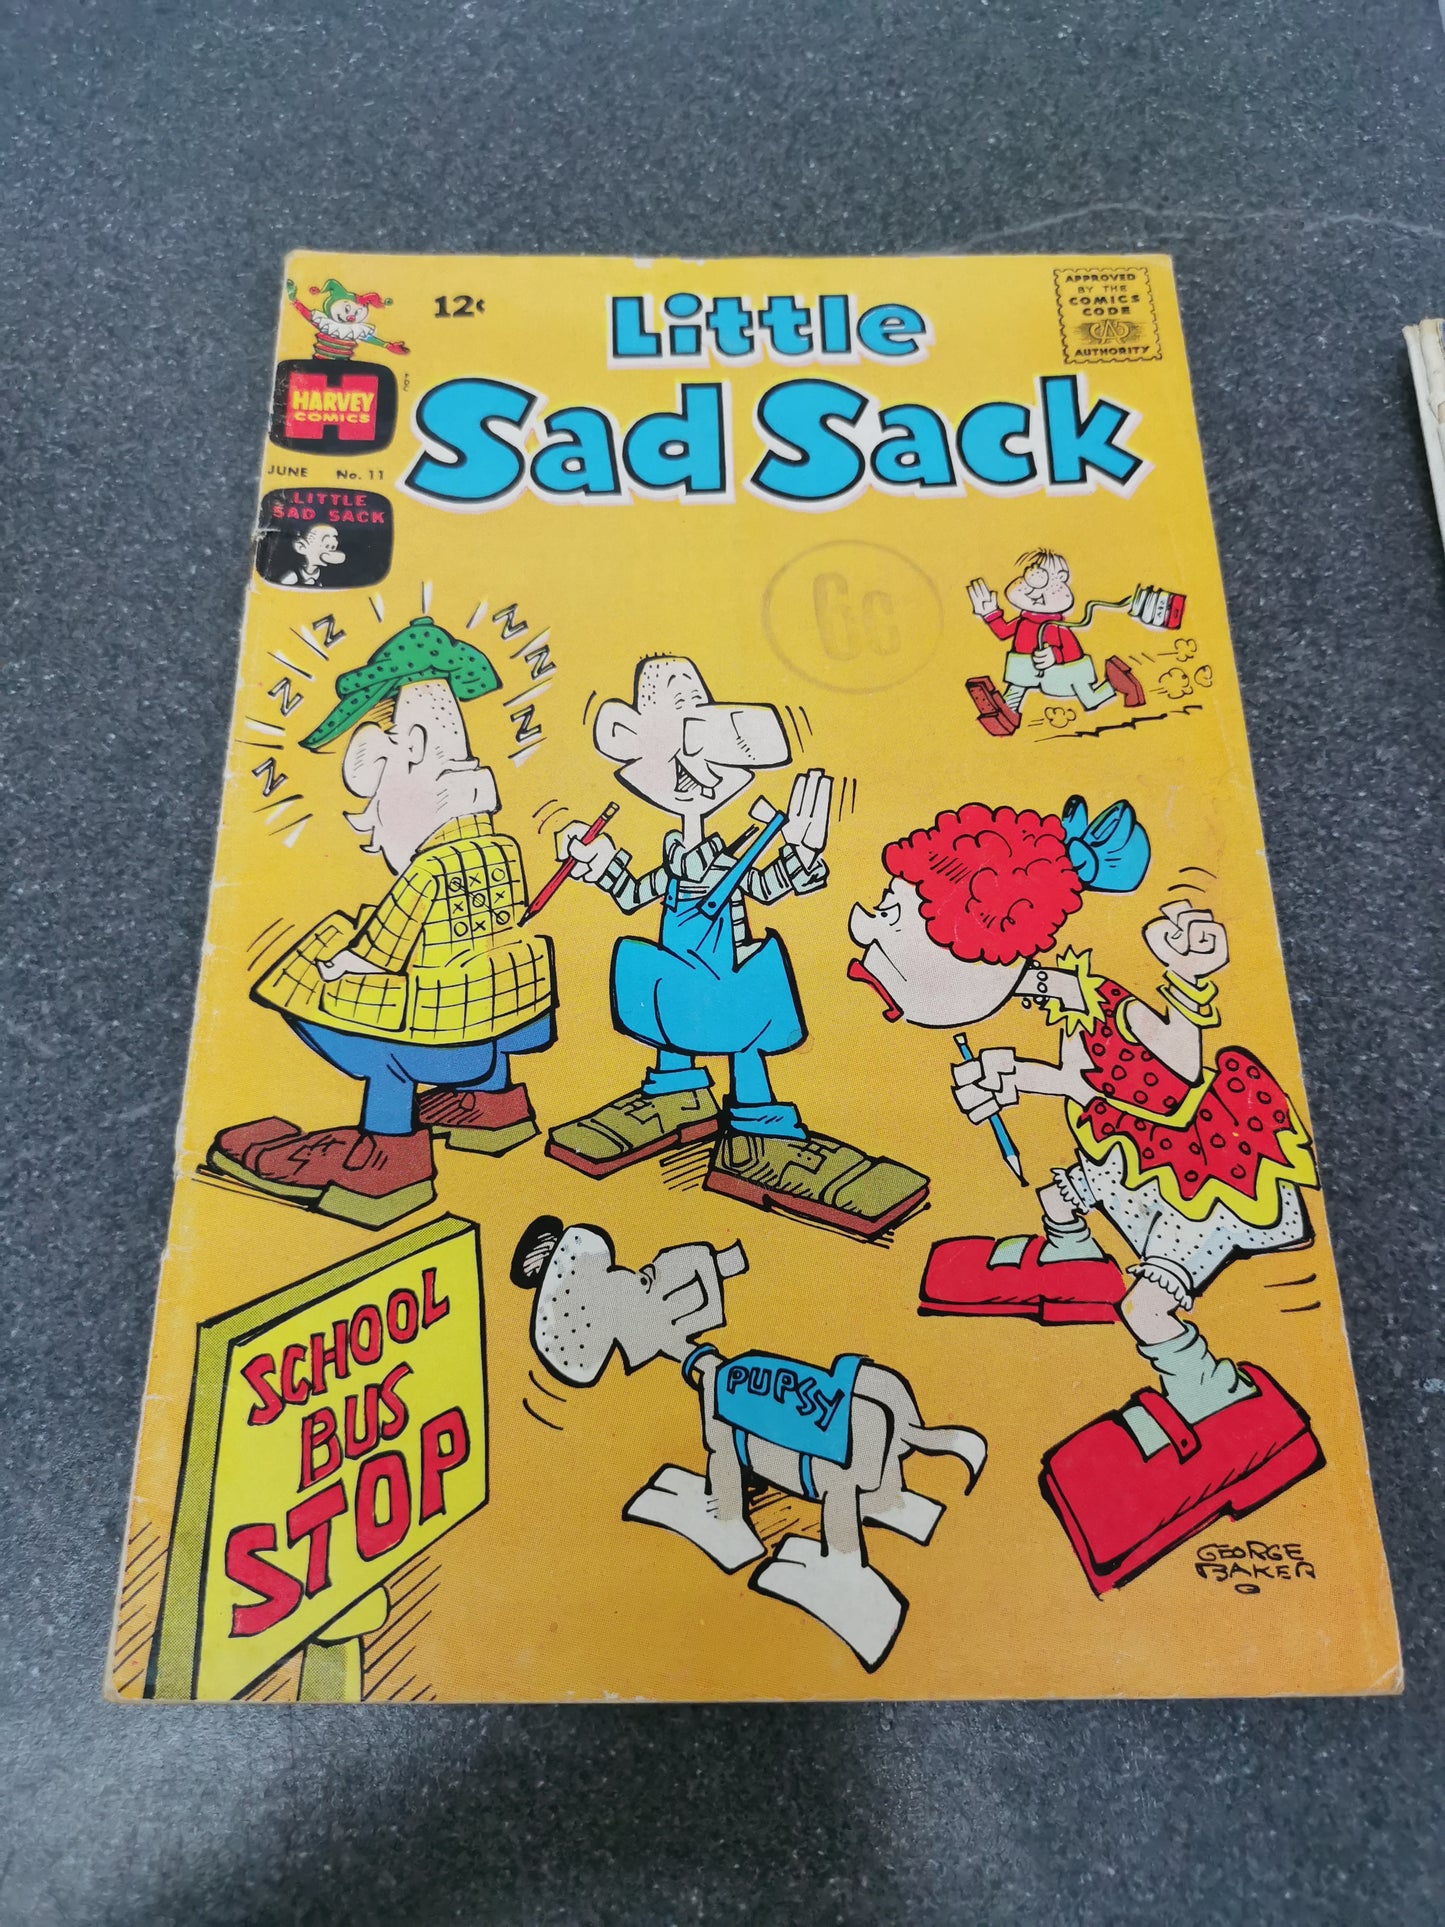 Little Sad Sack #11 1966 Harvey Publications comics